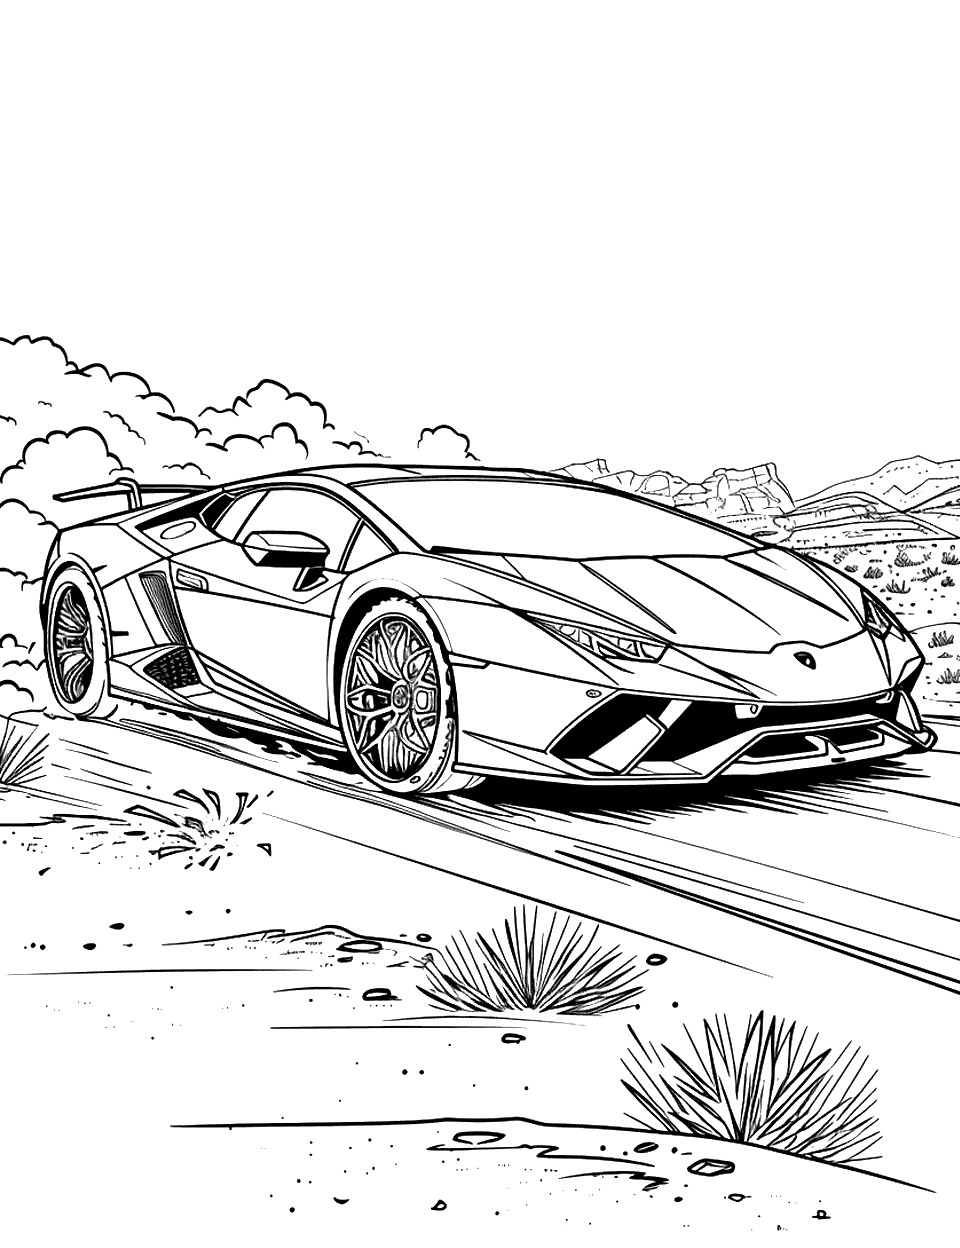 Lamborghini Adventure Coloring Page - A Lamborghini on a desert road, kicking up dust behind it.